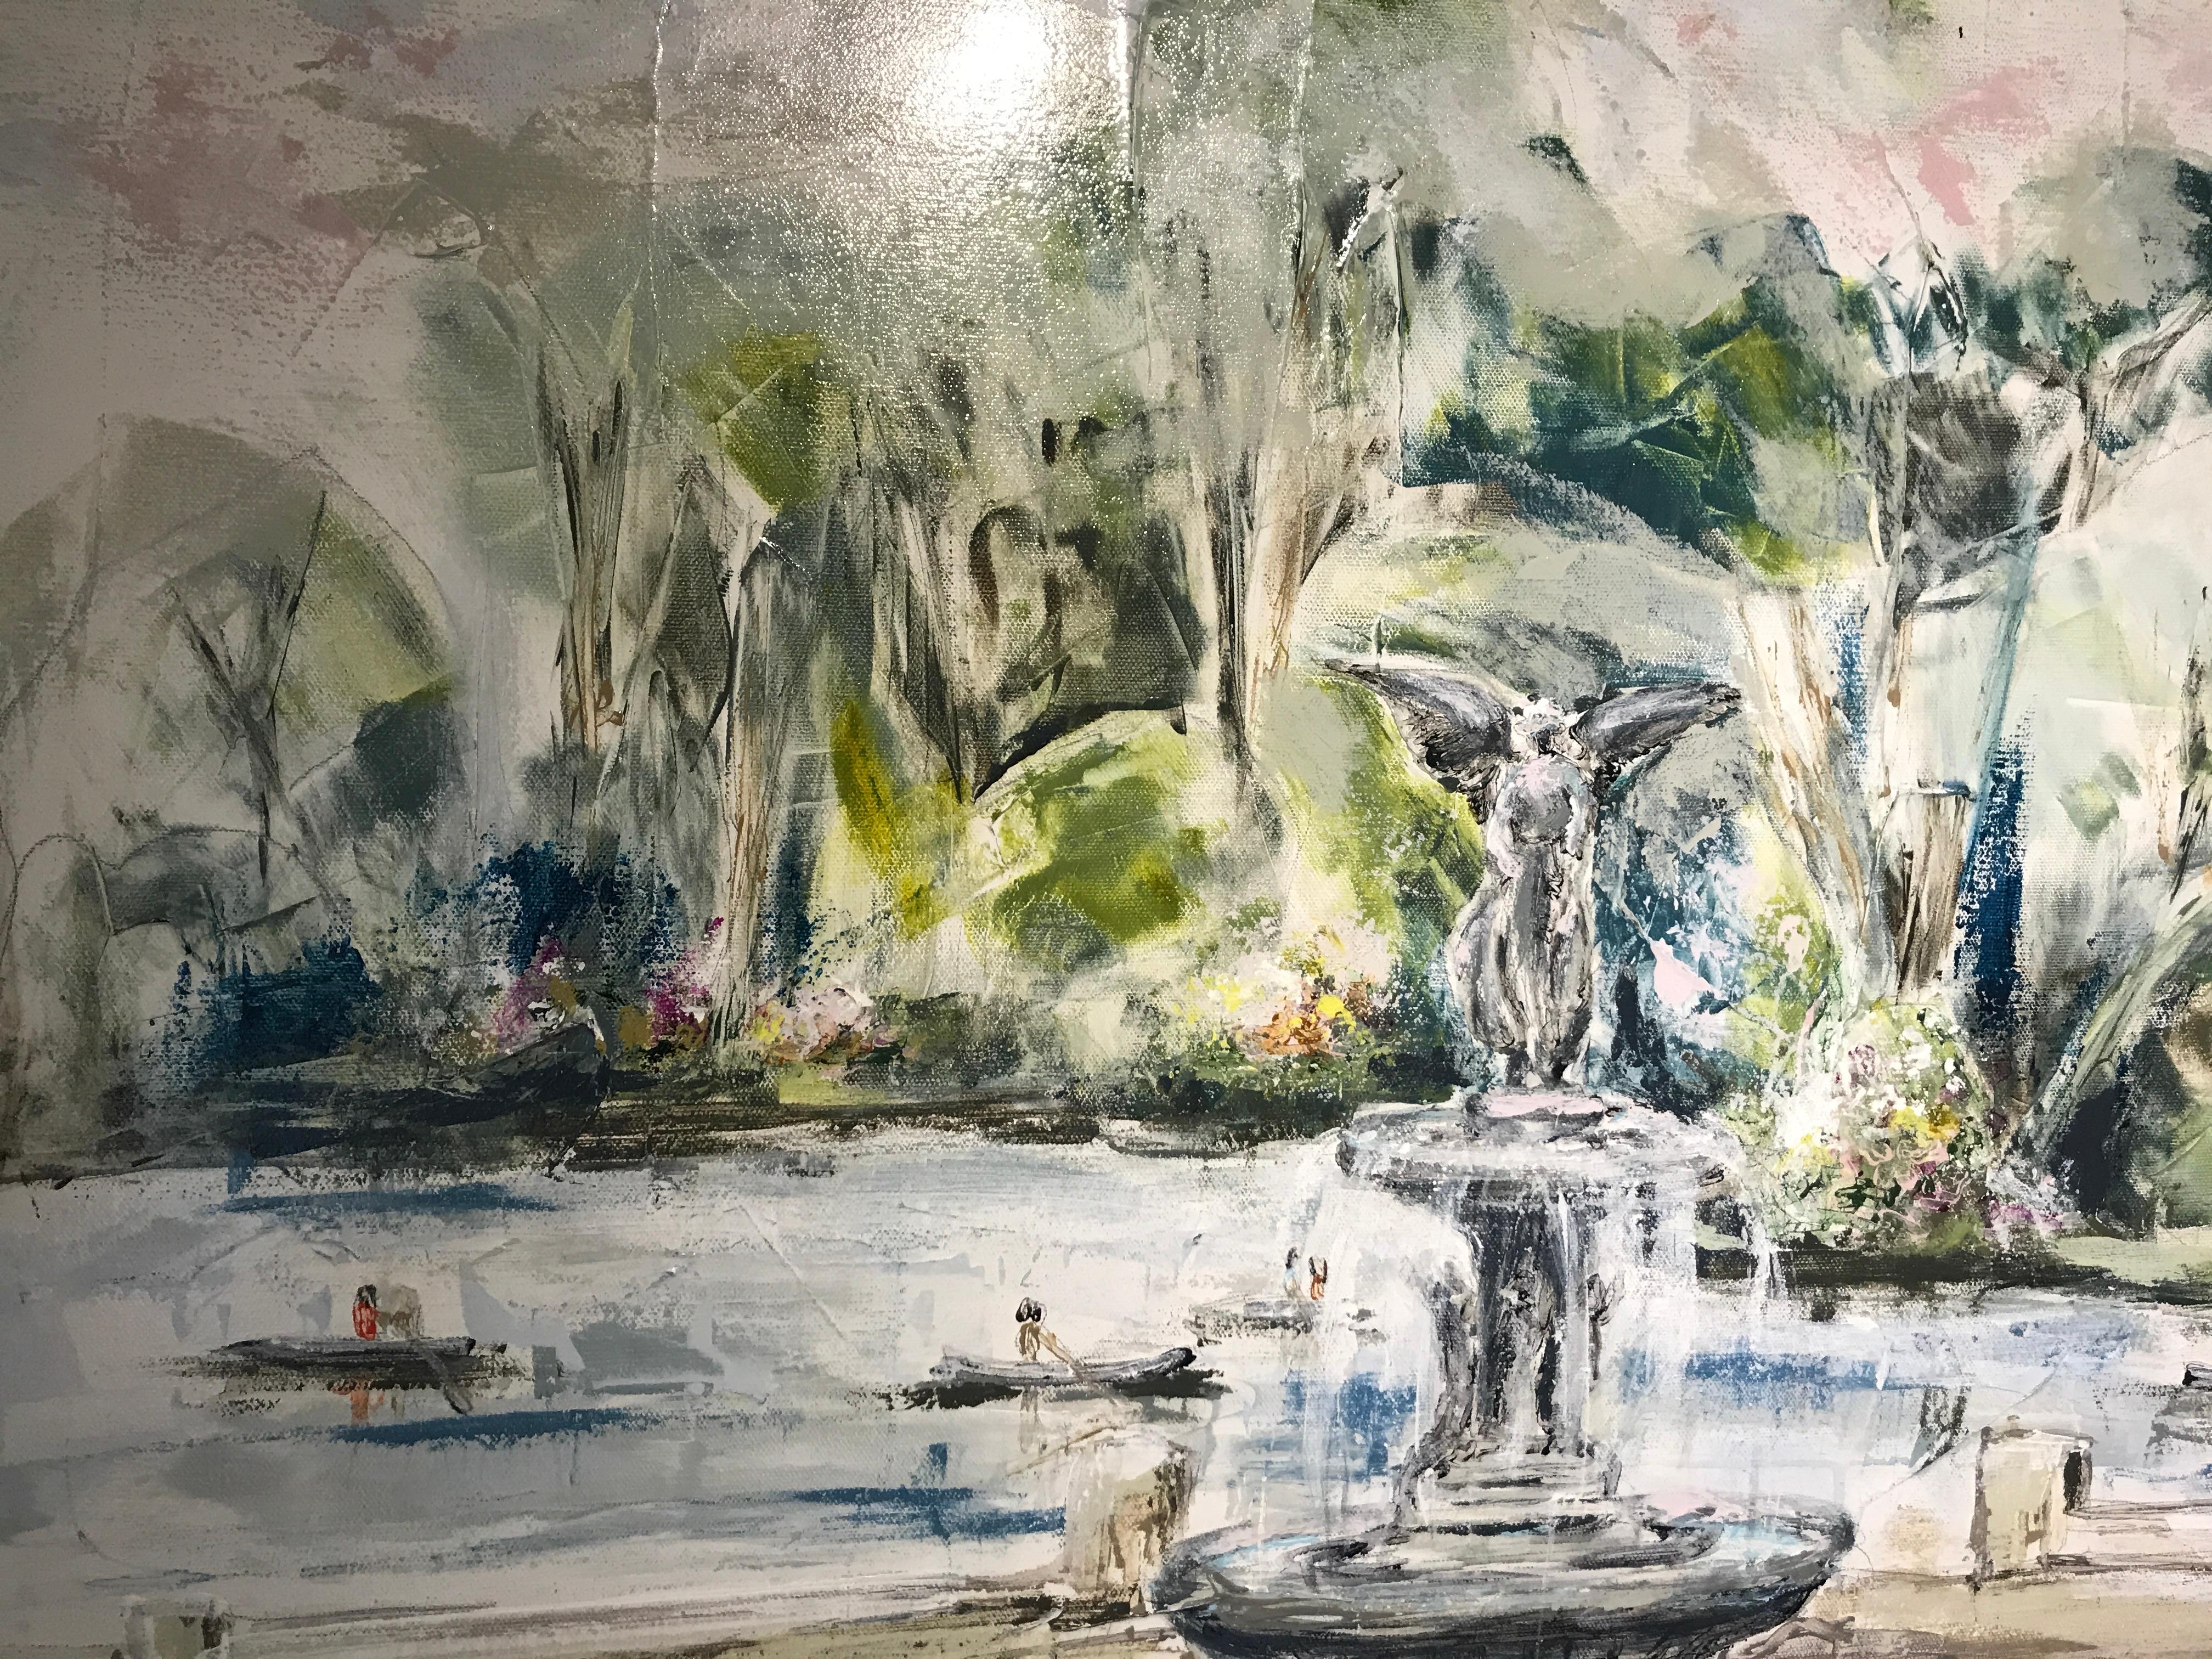 Bethesda Fountain/Central Park, Sarah Robertson Mixed Media on Canvas Painting 6